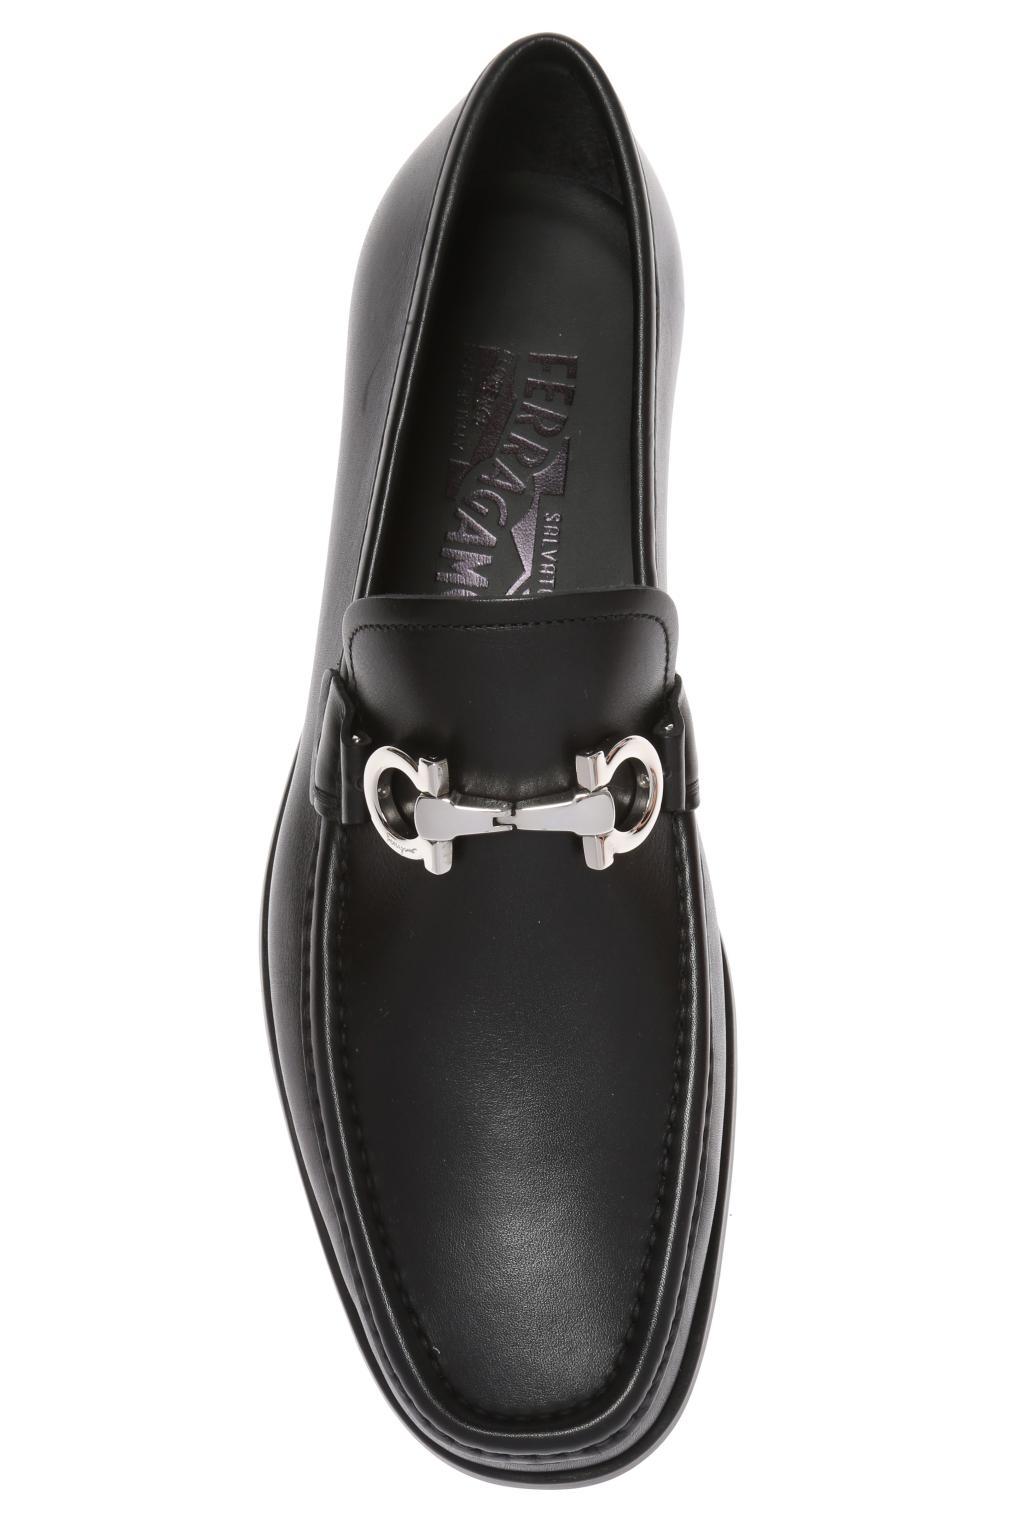 Ferragamo Leather 'chris' Loafers in Black for Men - Lyst